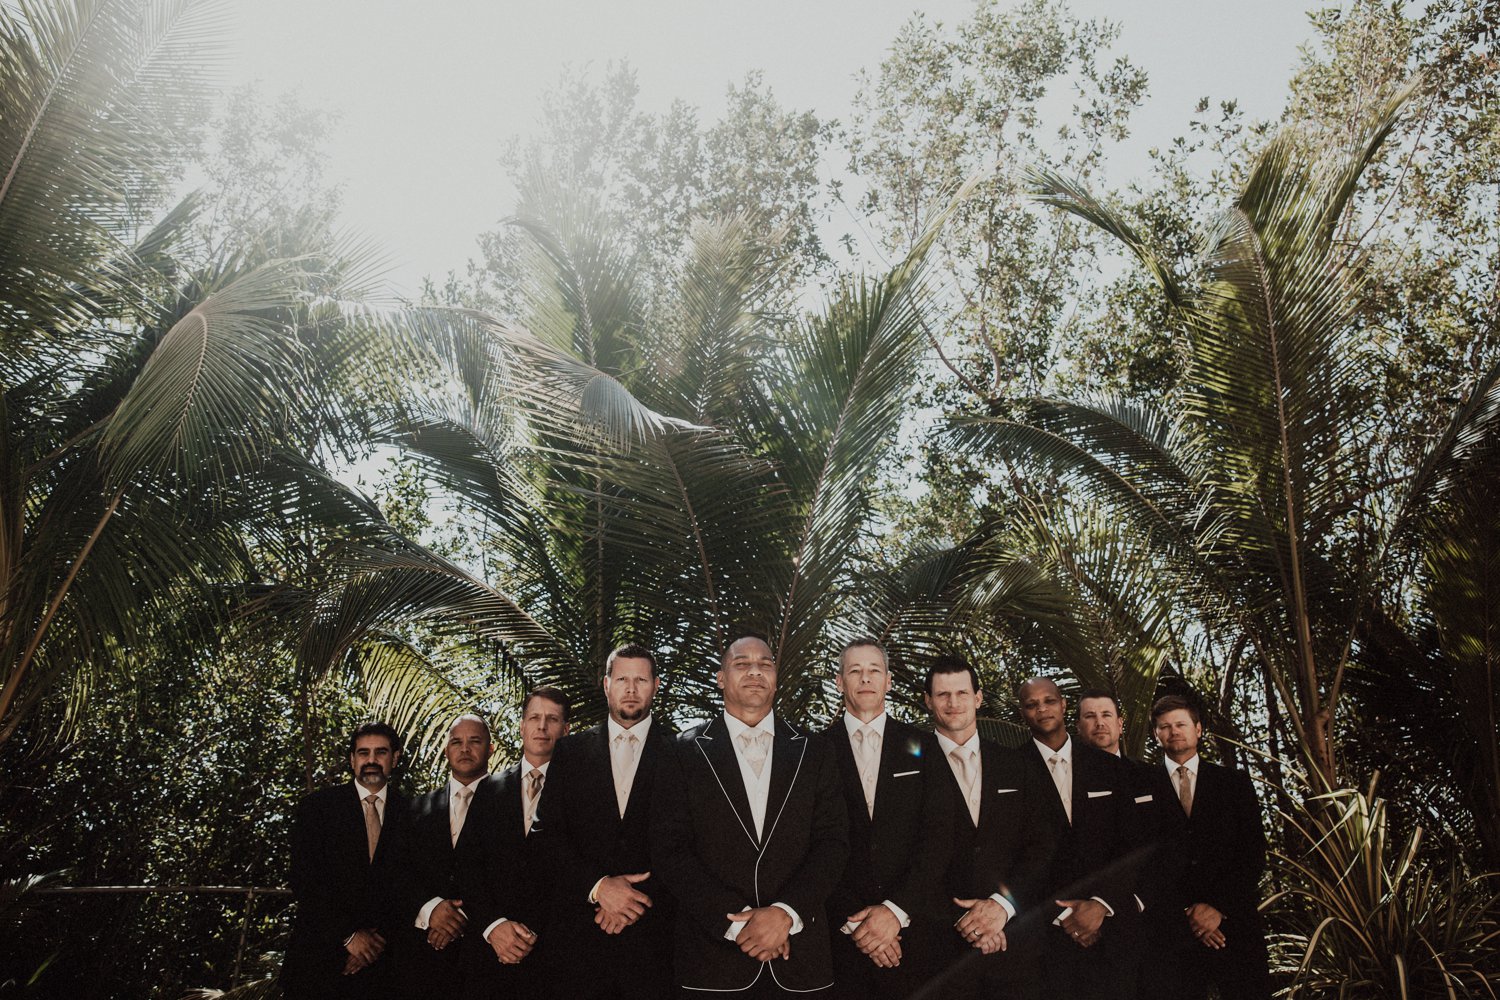  images by feliciathephotographer.com | destination wedding photographer | el dorado riviera maya | glamorous | beachside | resort | groomsmen portraits | palm trees | game face | the black tux | tropical | 